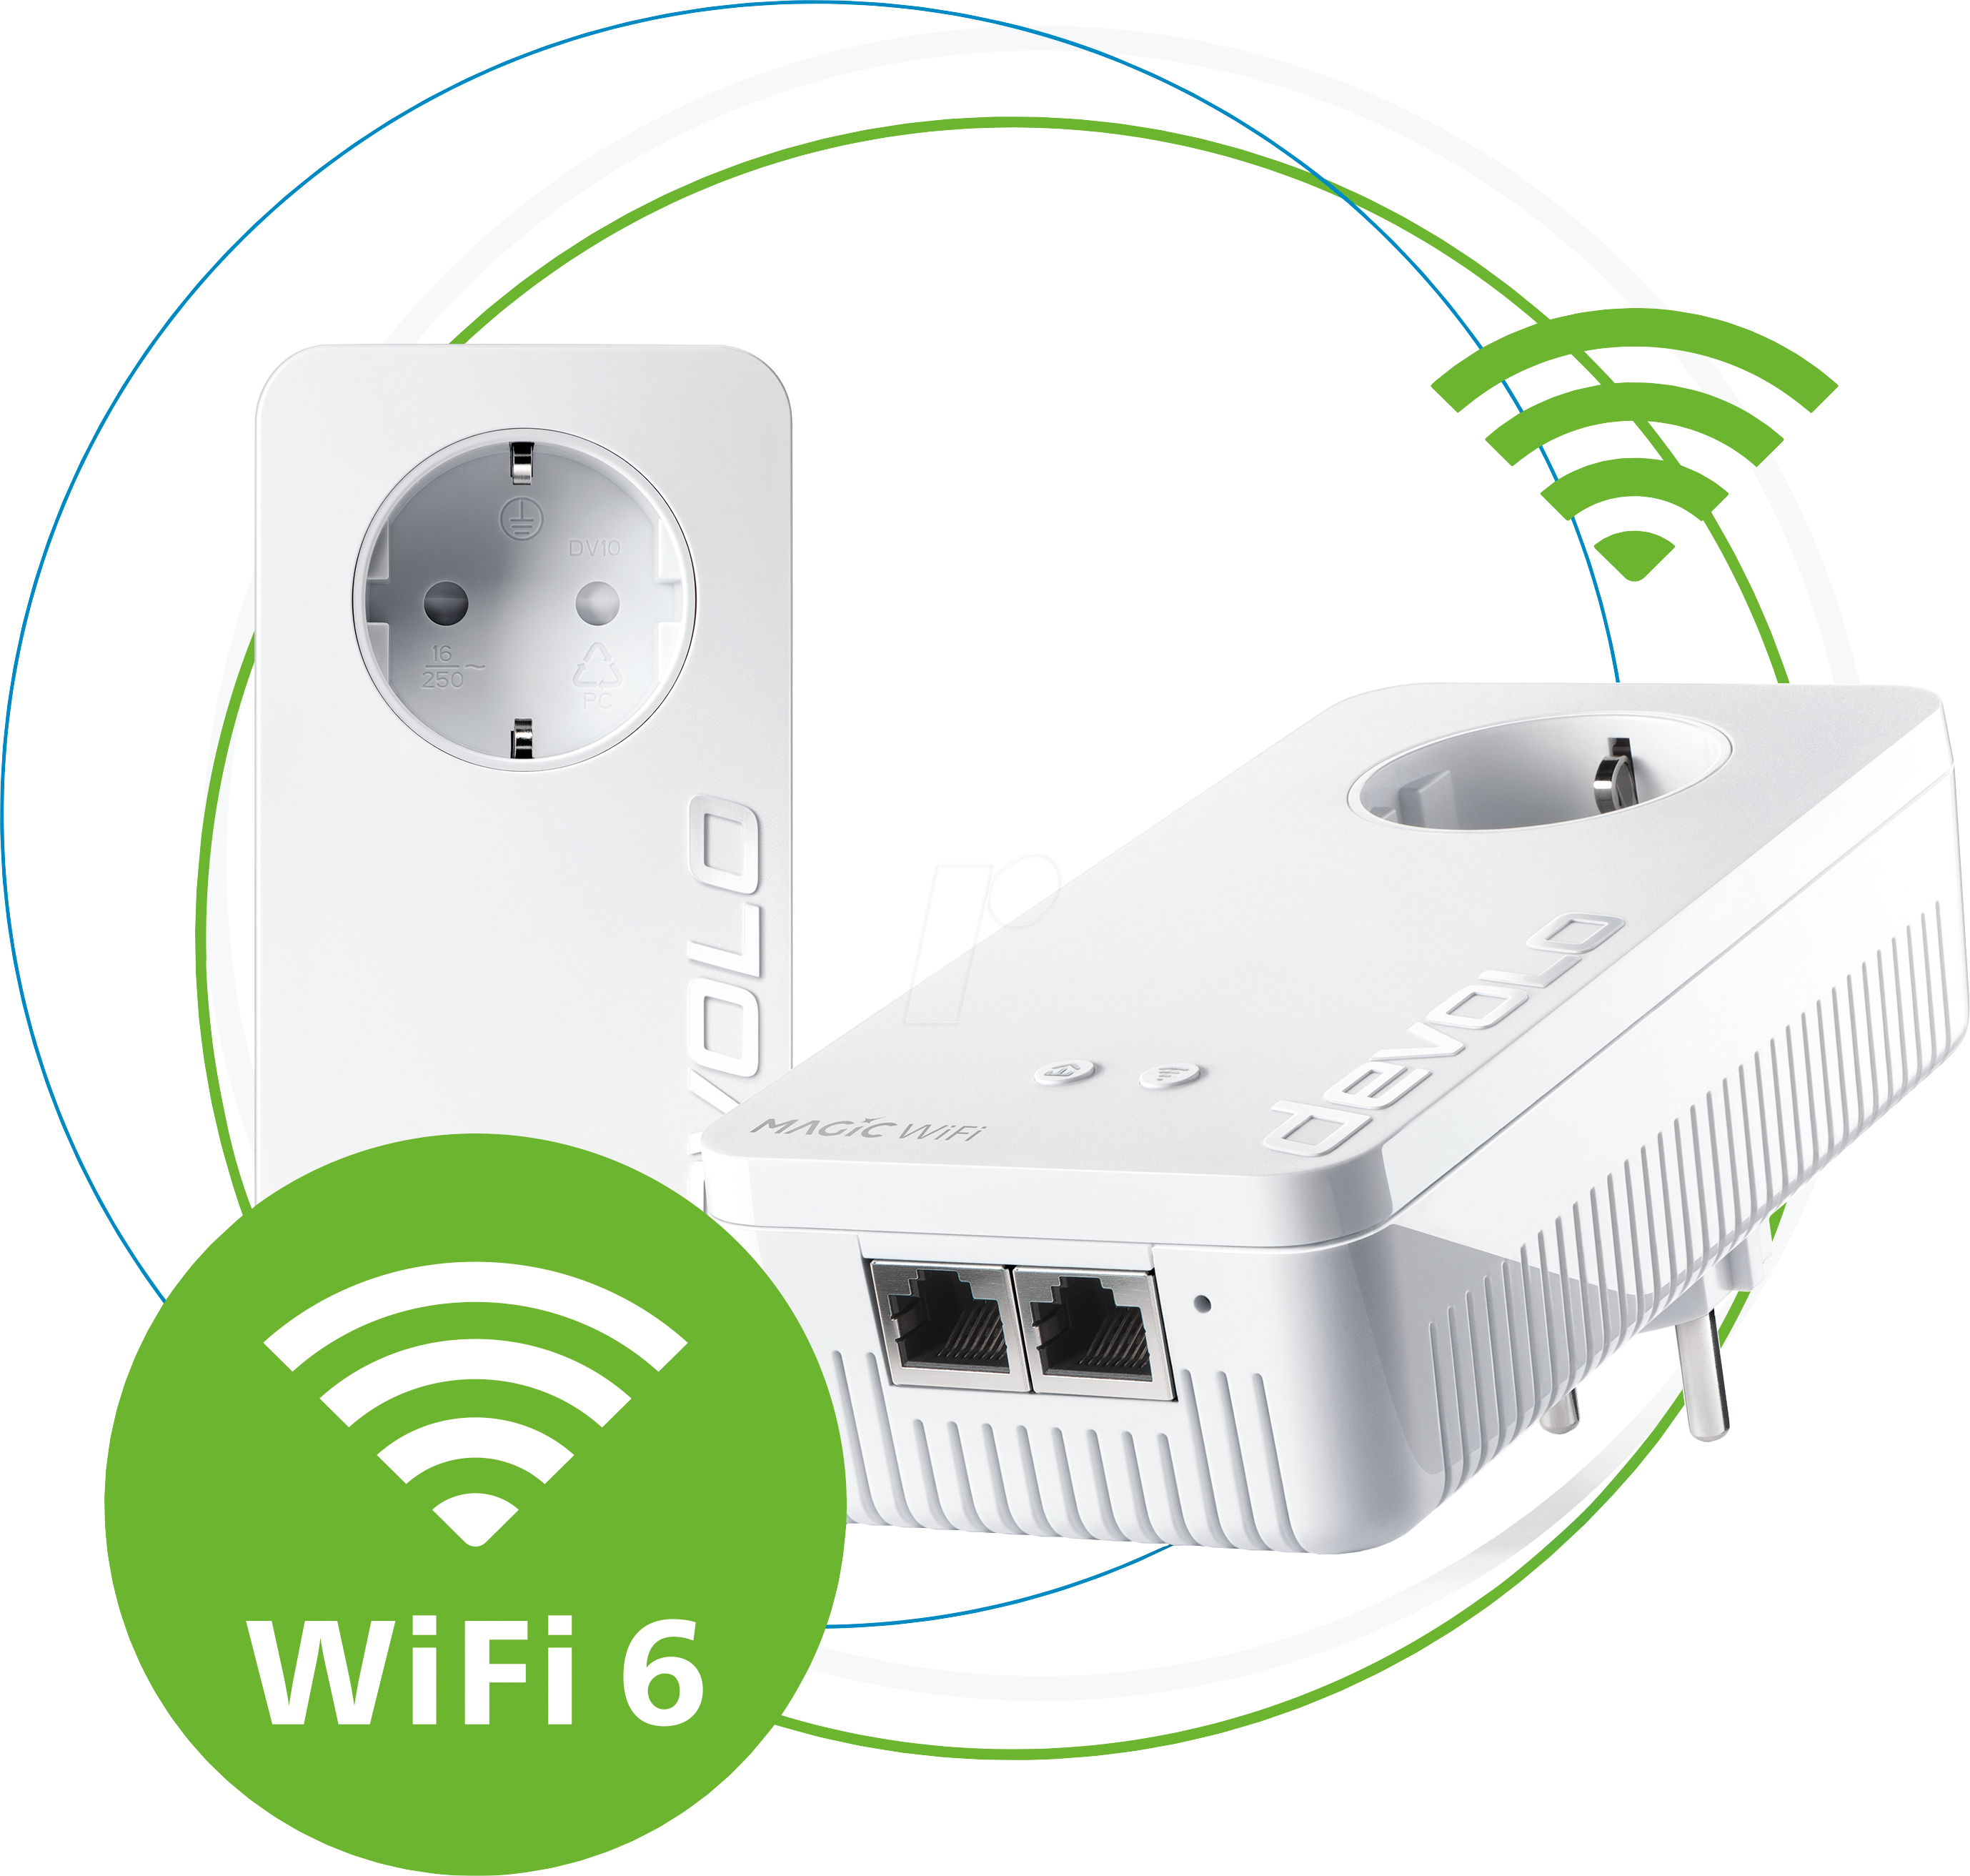 DEVOLO 8816: Powerline Kit Magic 2 WiFi 6 (2 device) at reichelt elektronik